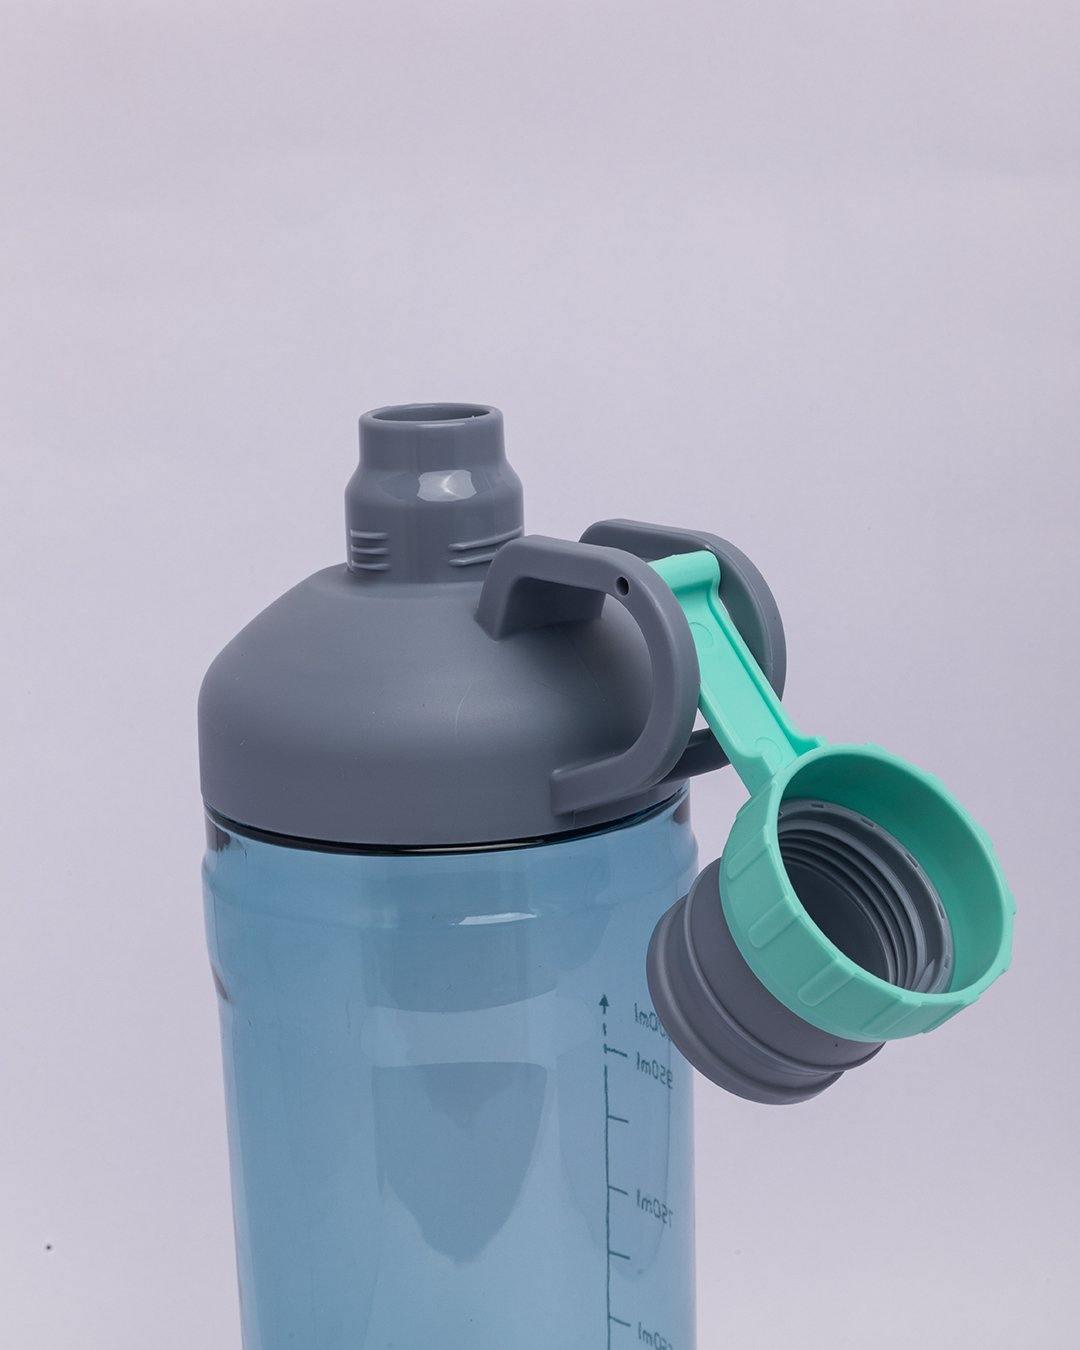 Donati Bottle, Water Bottle, Blue, Plastic, 1.5 Litre - MARKET 99